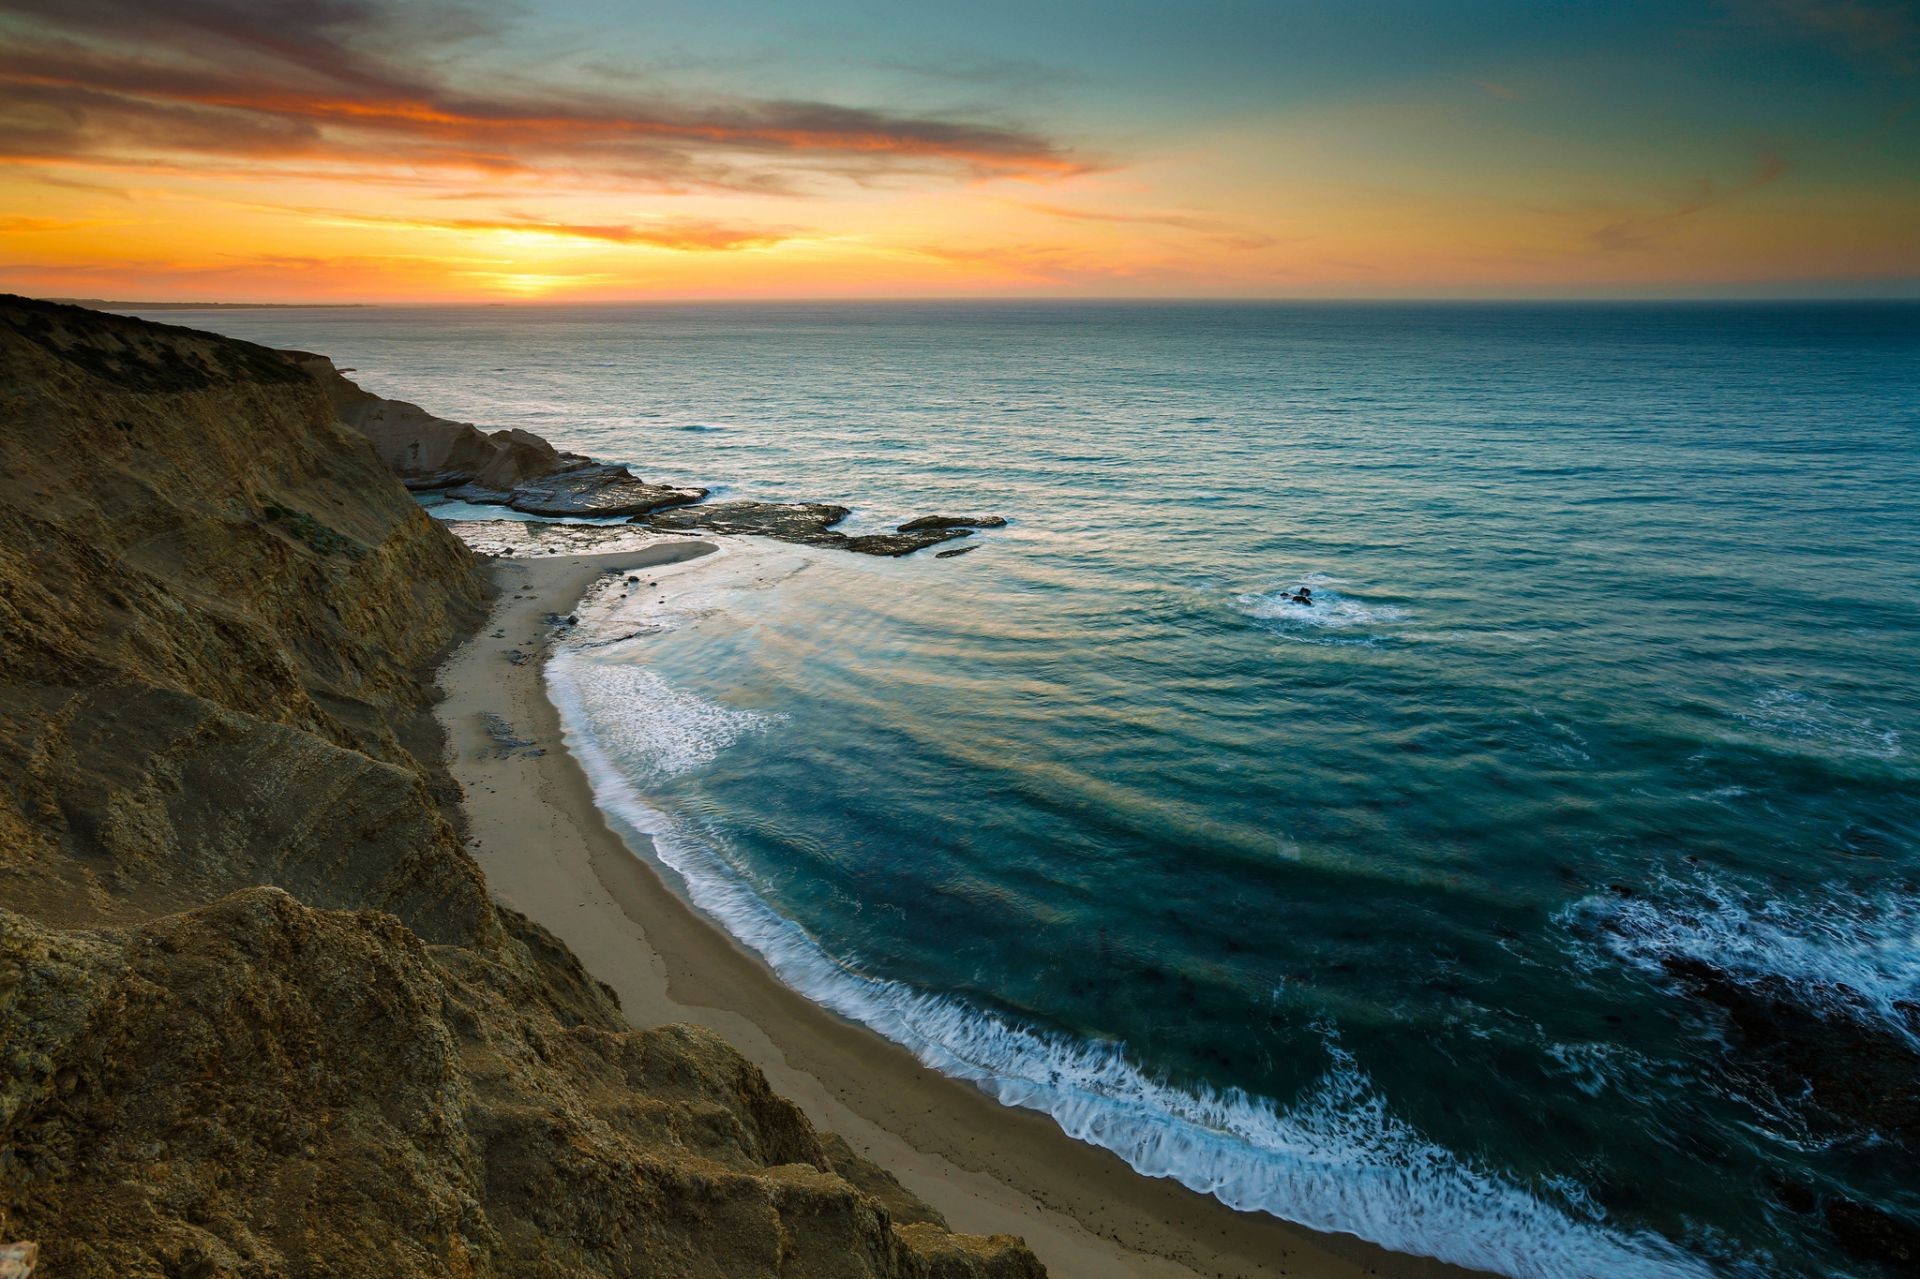 sea and ocean water sea ocean seashore beach sunset surf travel seascape landscape wave sky nature scenic sun dawn evening